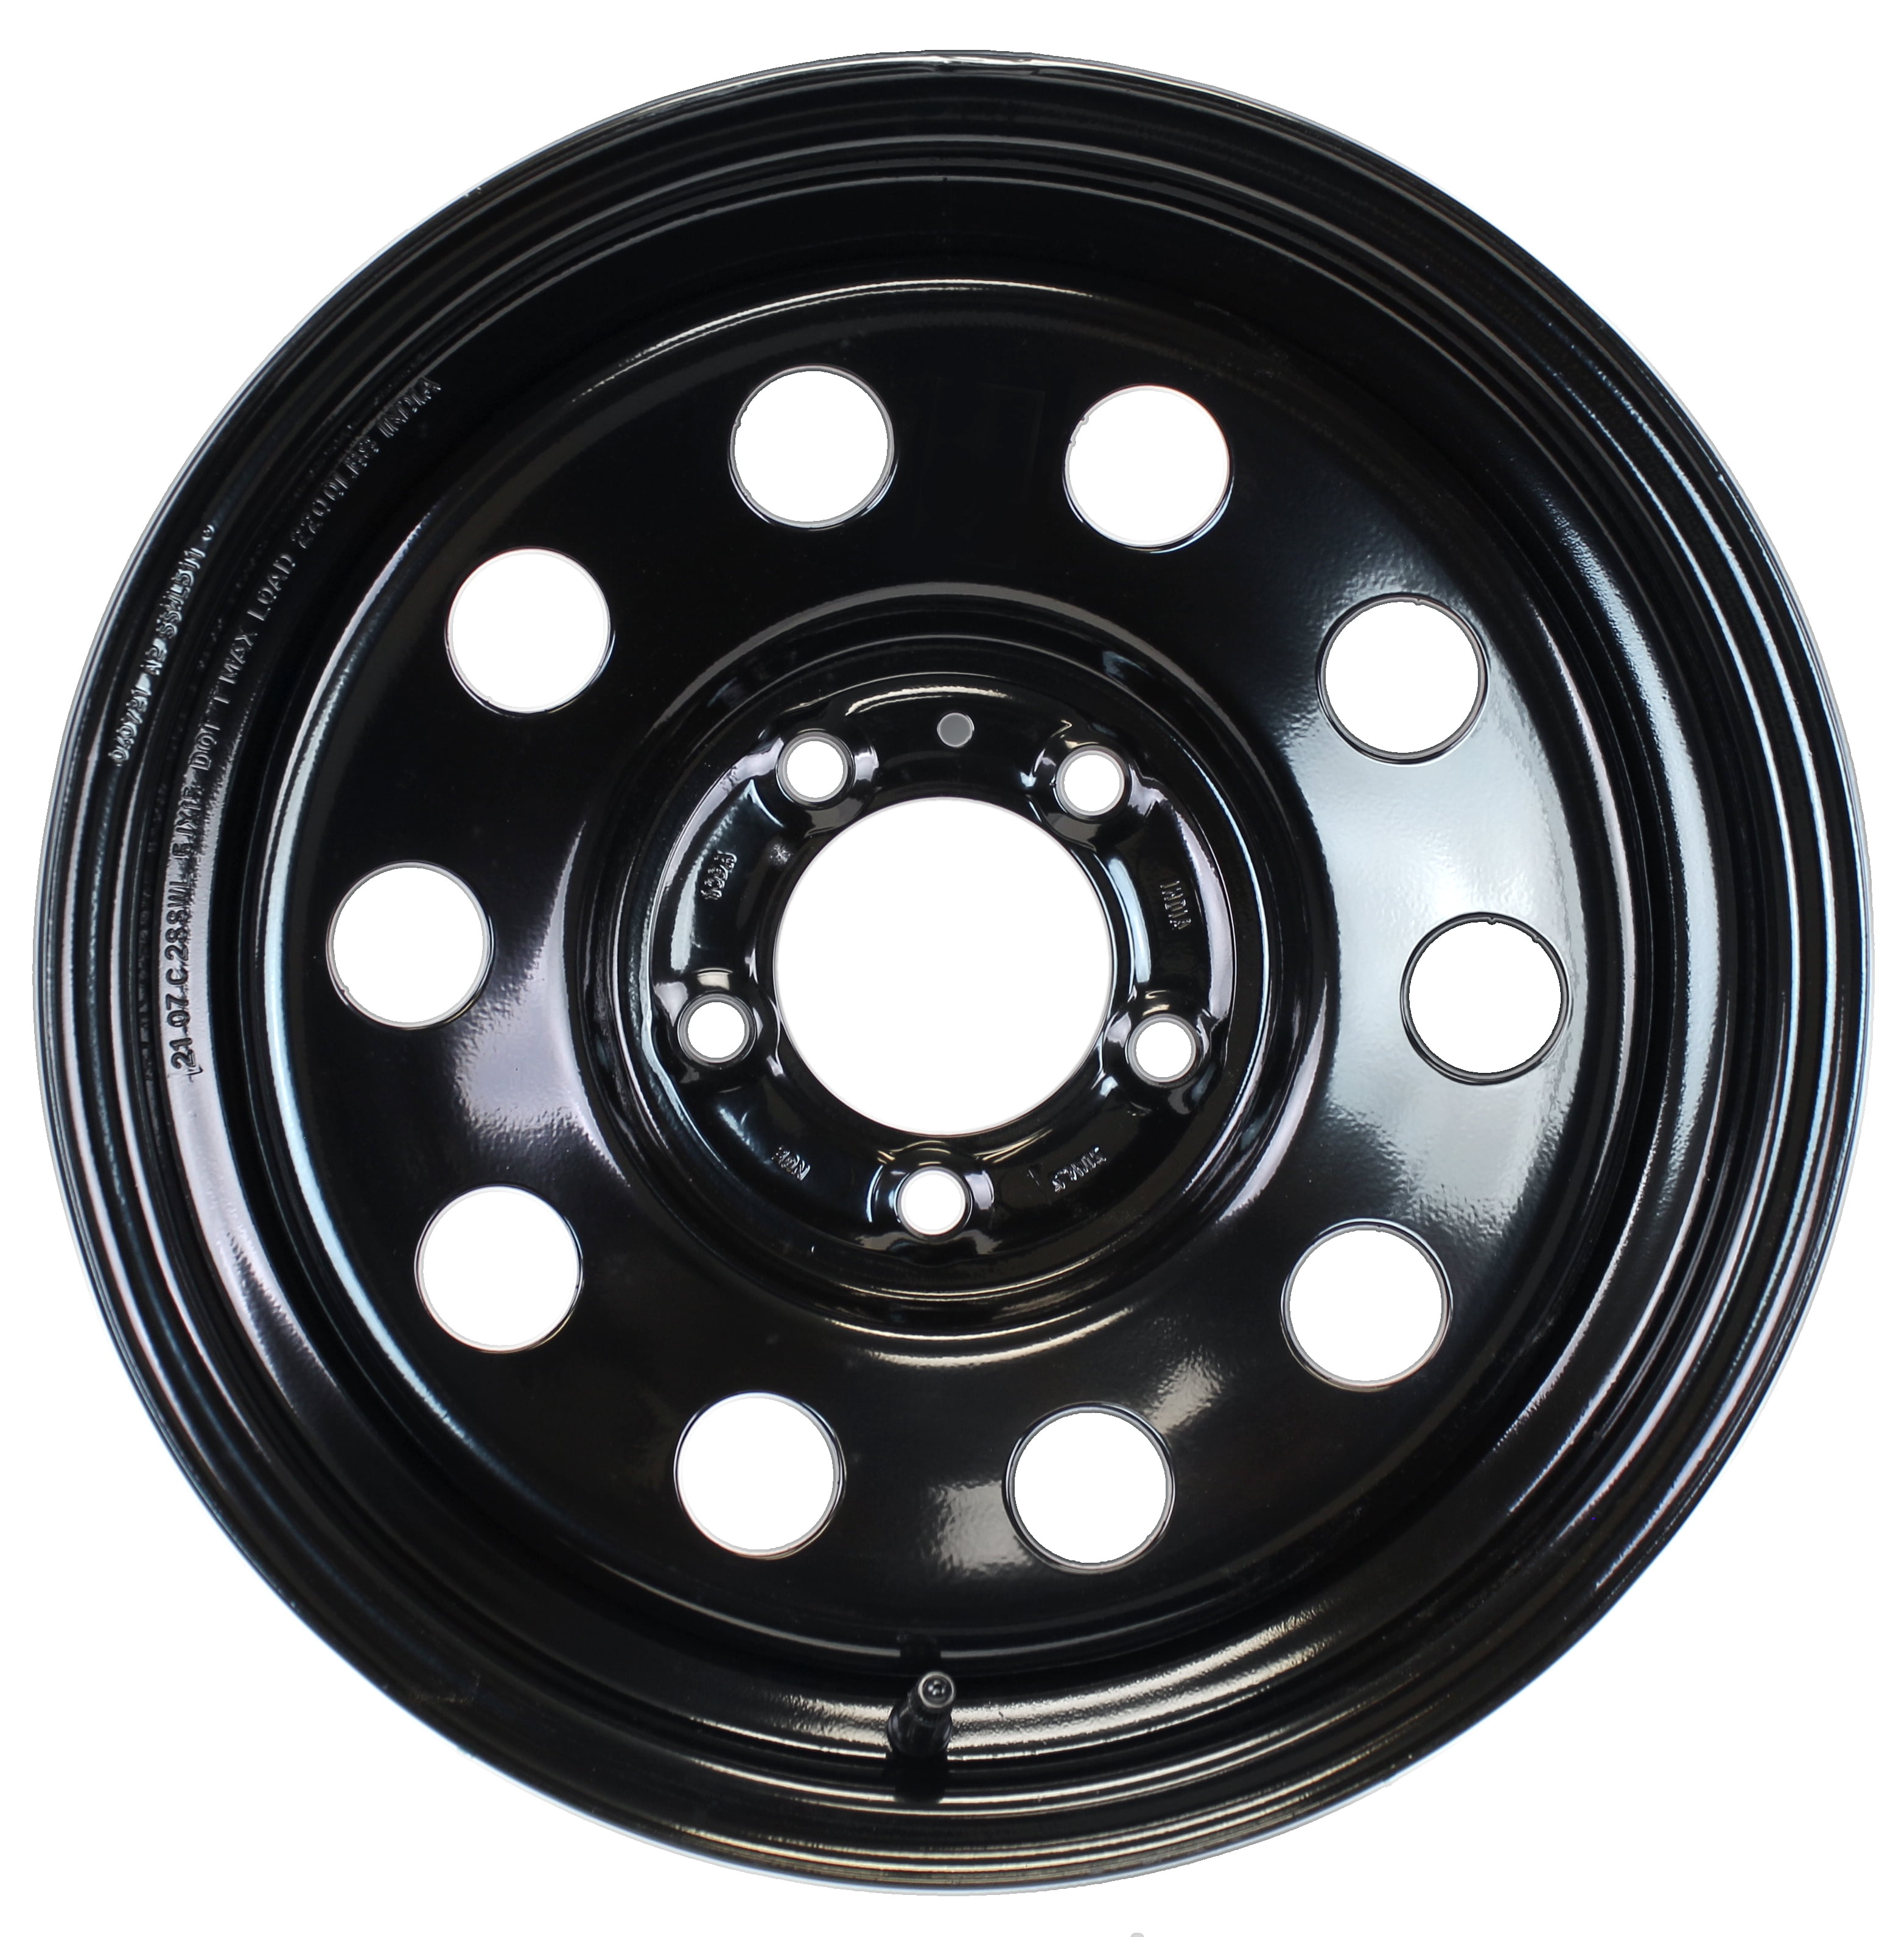 3.19 Center Bore 2-Pack Trailer Rim Wheel 15X5 5-4.5 Black Modular 1870 Lb 